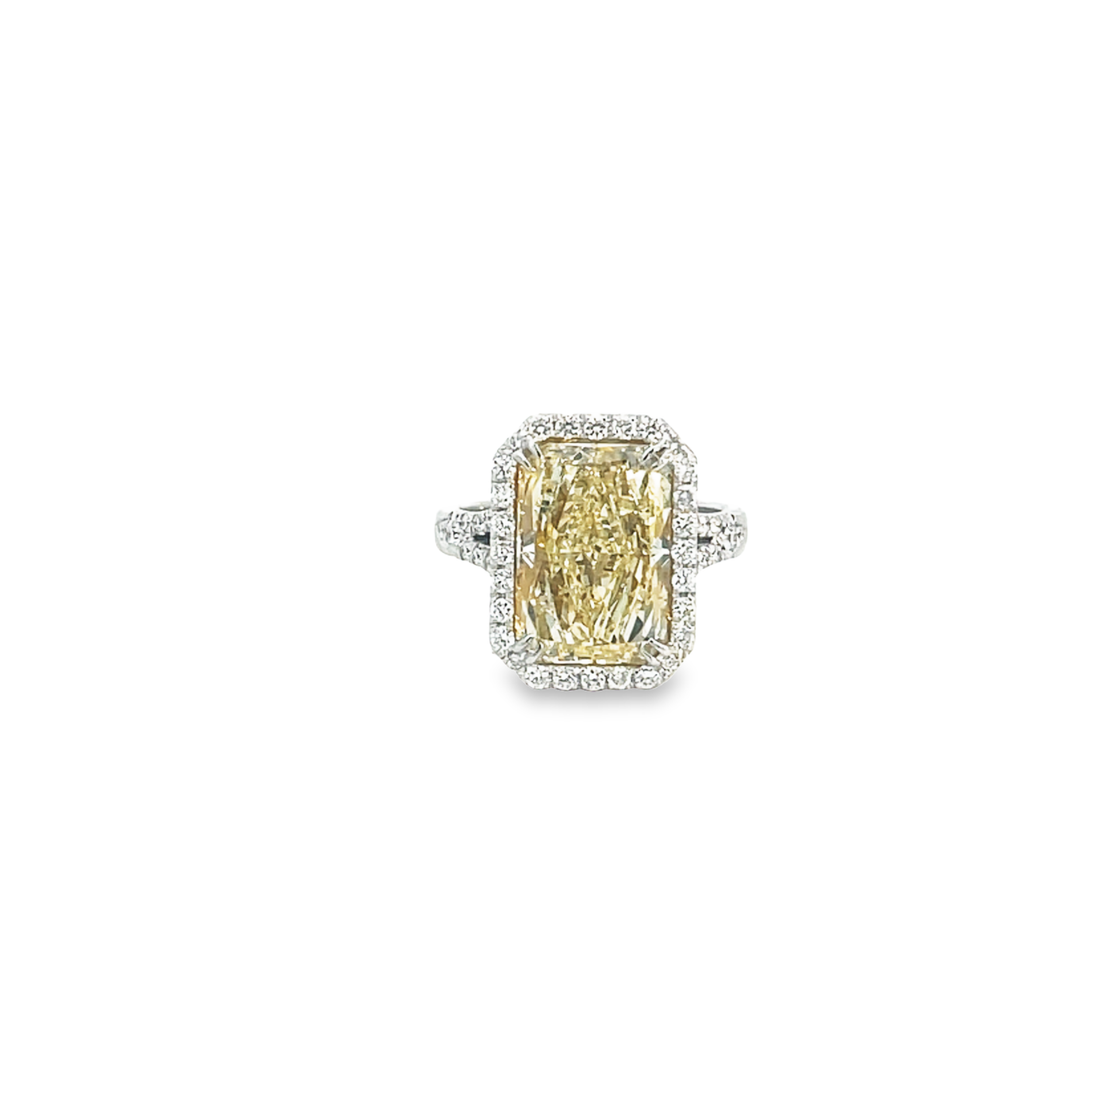 White Gold Radiant Cut Yellow Diamond Engagement Ring - Skeie's Jewelers